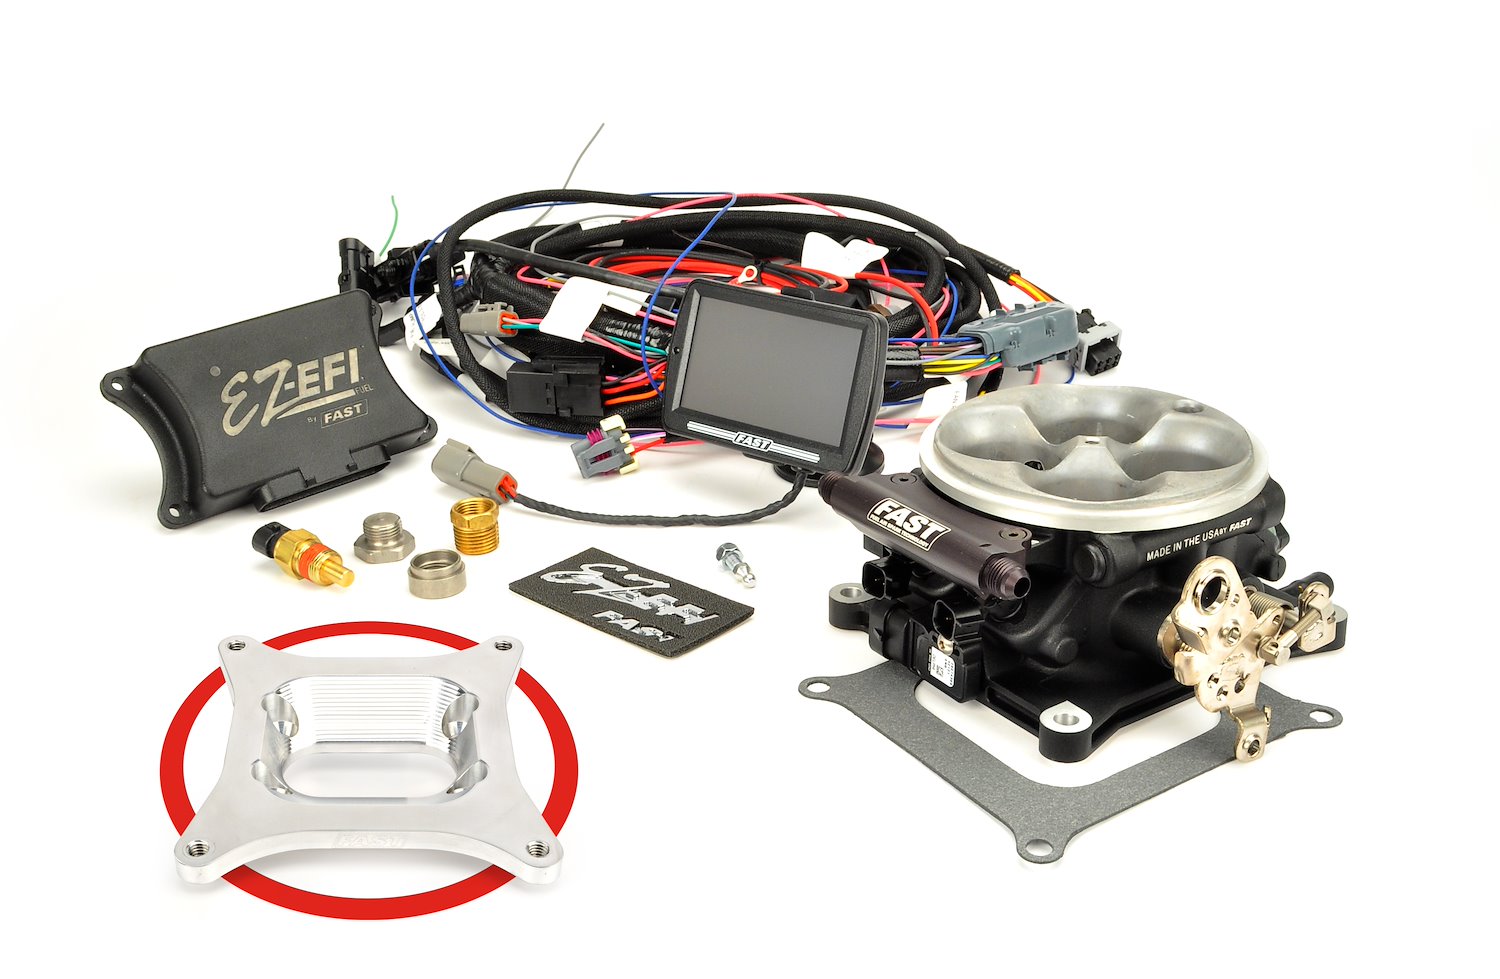 EZ-EFI Self-Tuning Fuel Injection System Kit